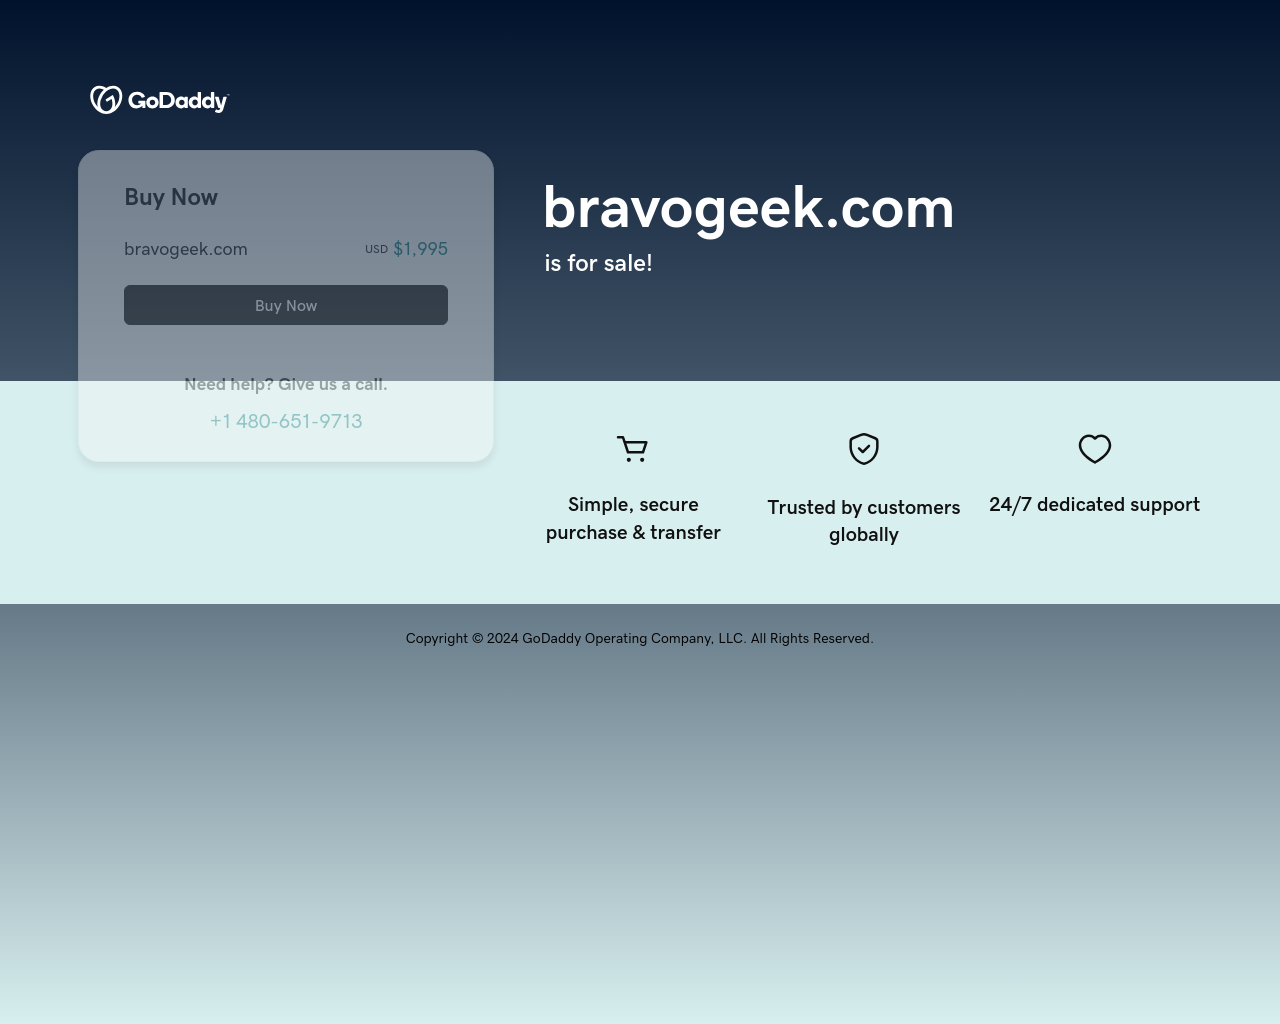 bravogeek.com